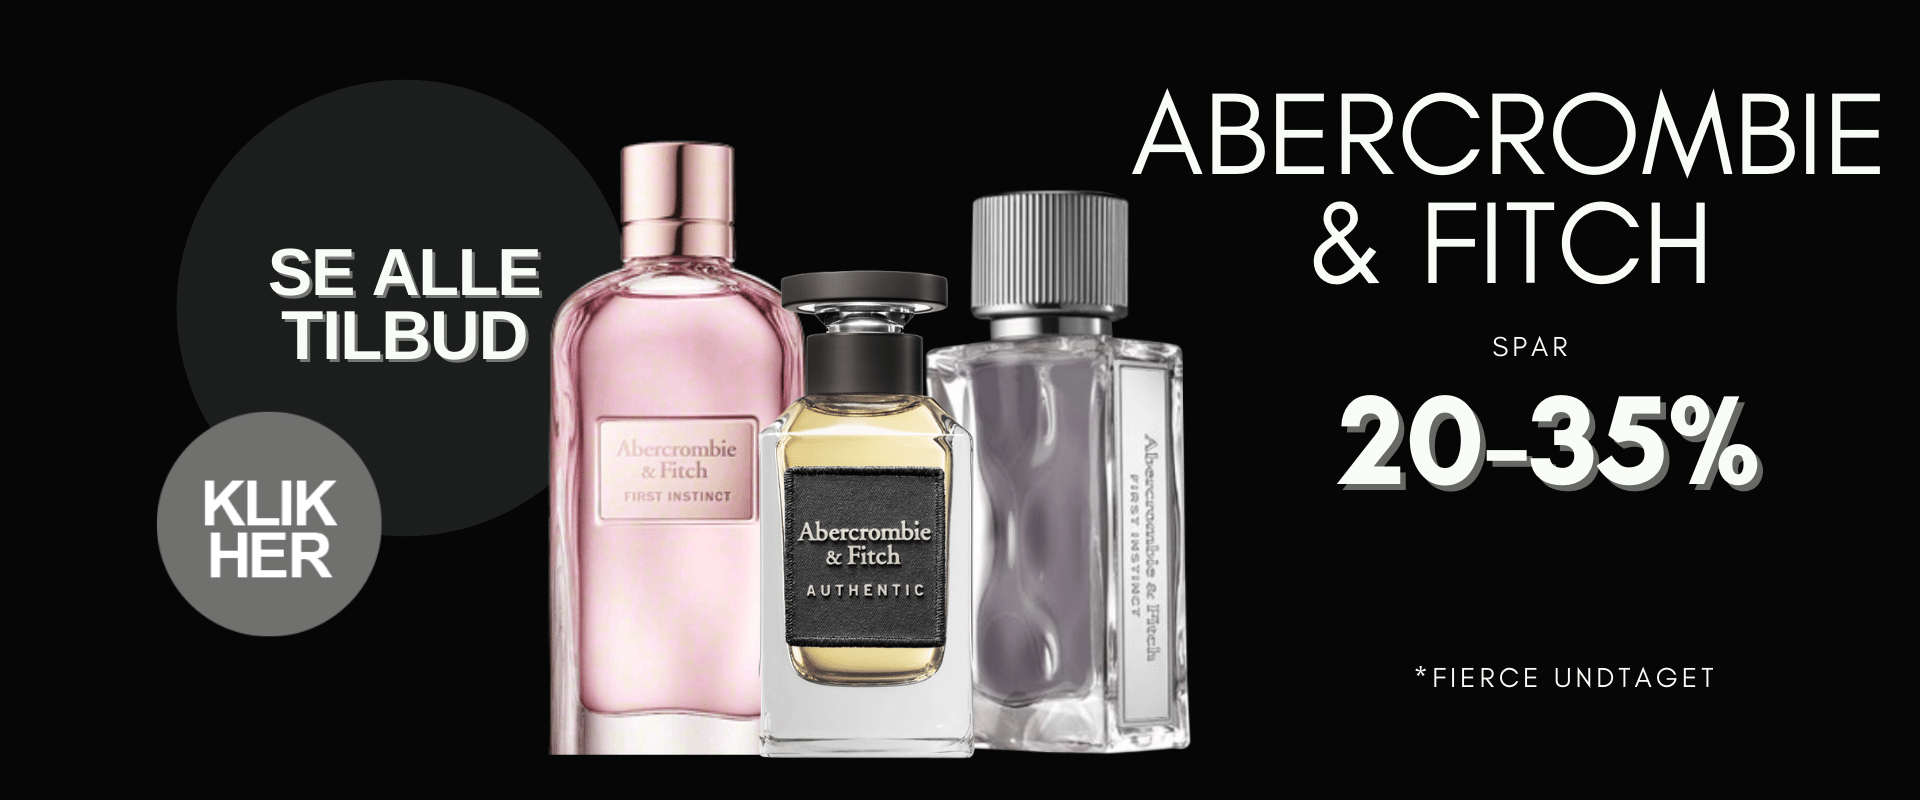 Black Week tilbud Abercrombie Fitch parfume Klik Her